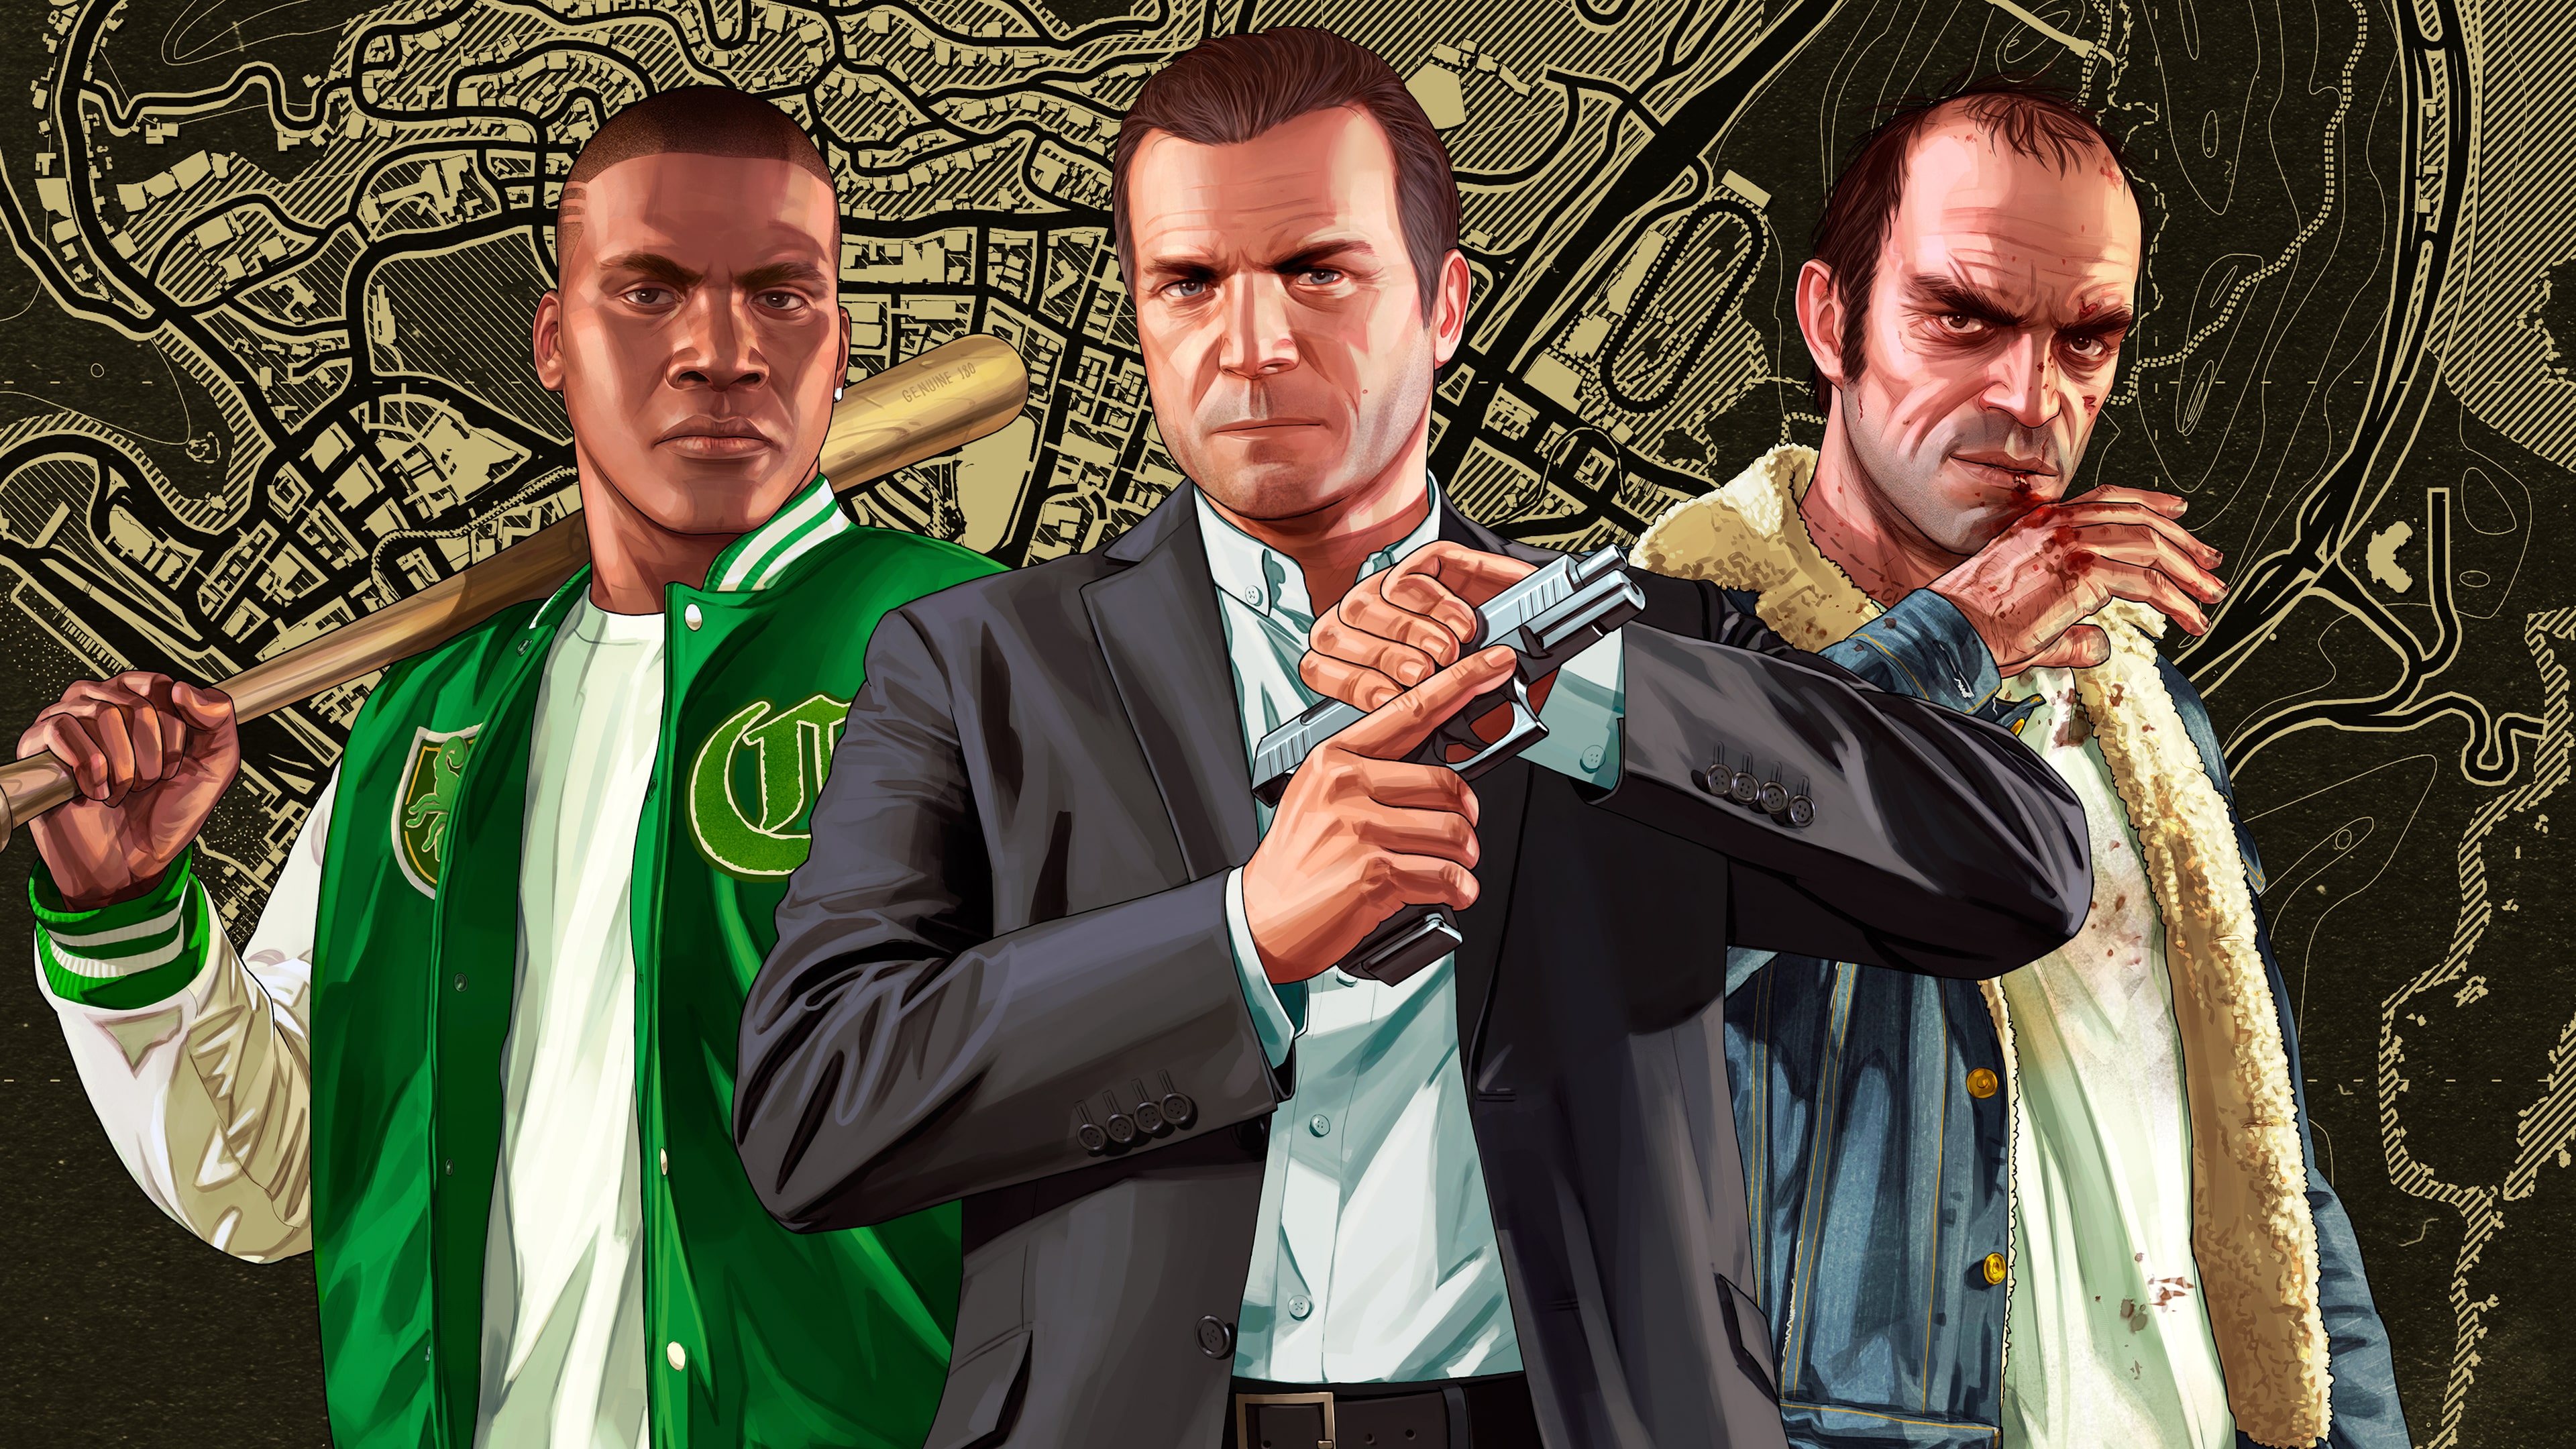 Grand Theft Auto V (PlayStation®5) (韩语, 简体中文, 繁体中文, 英语)